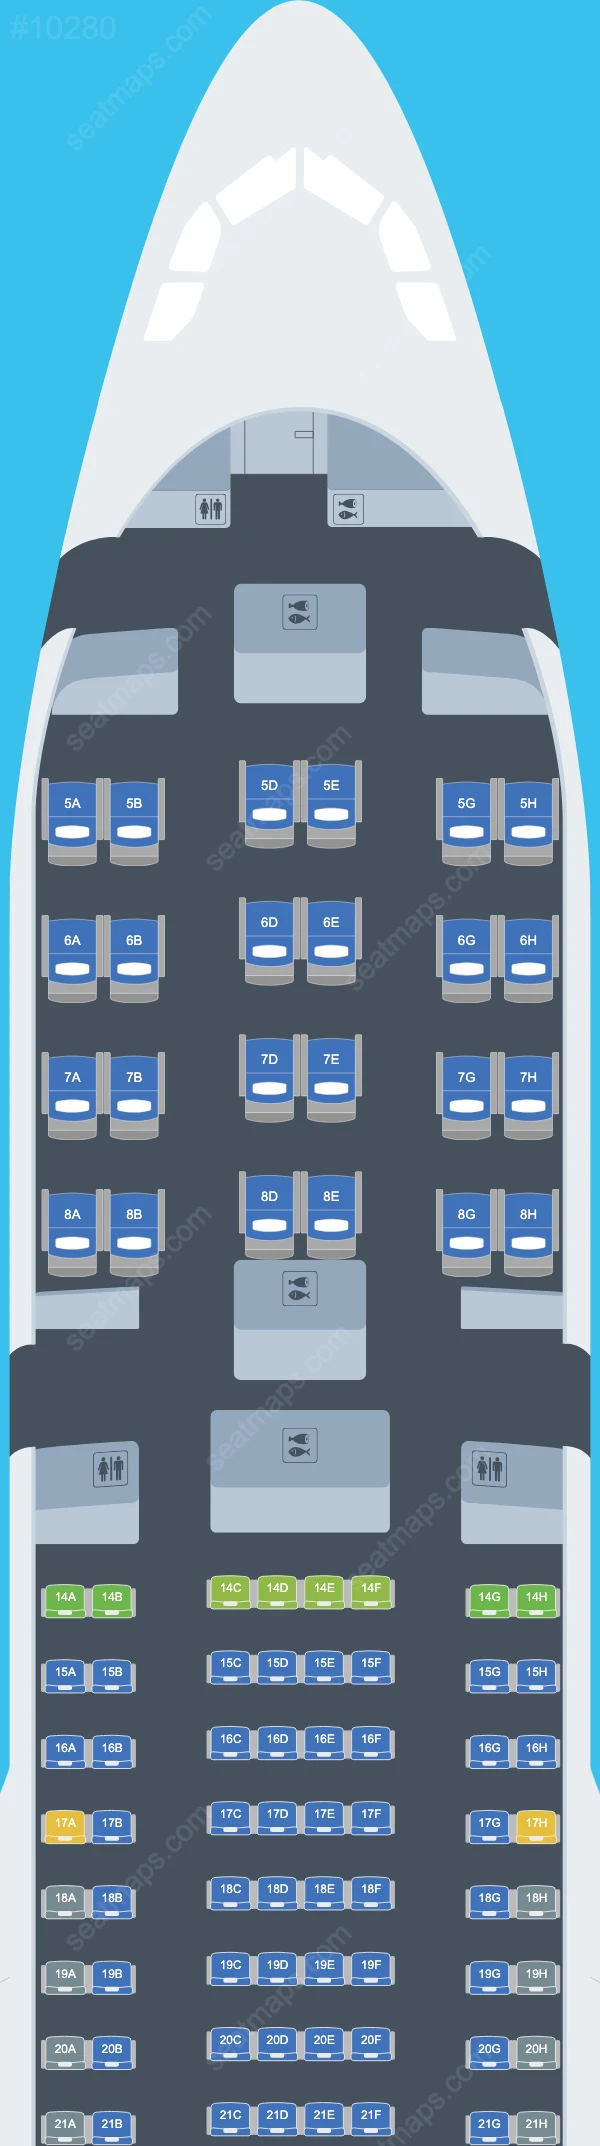 Aerolineas Argentinas Airbus A330 Seat Maps A330-200 V.1